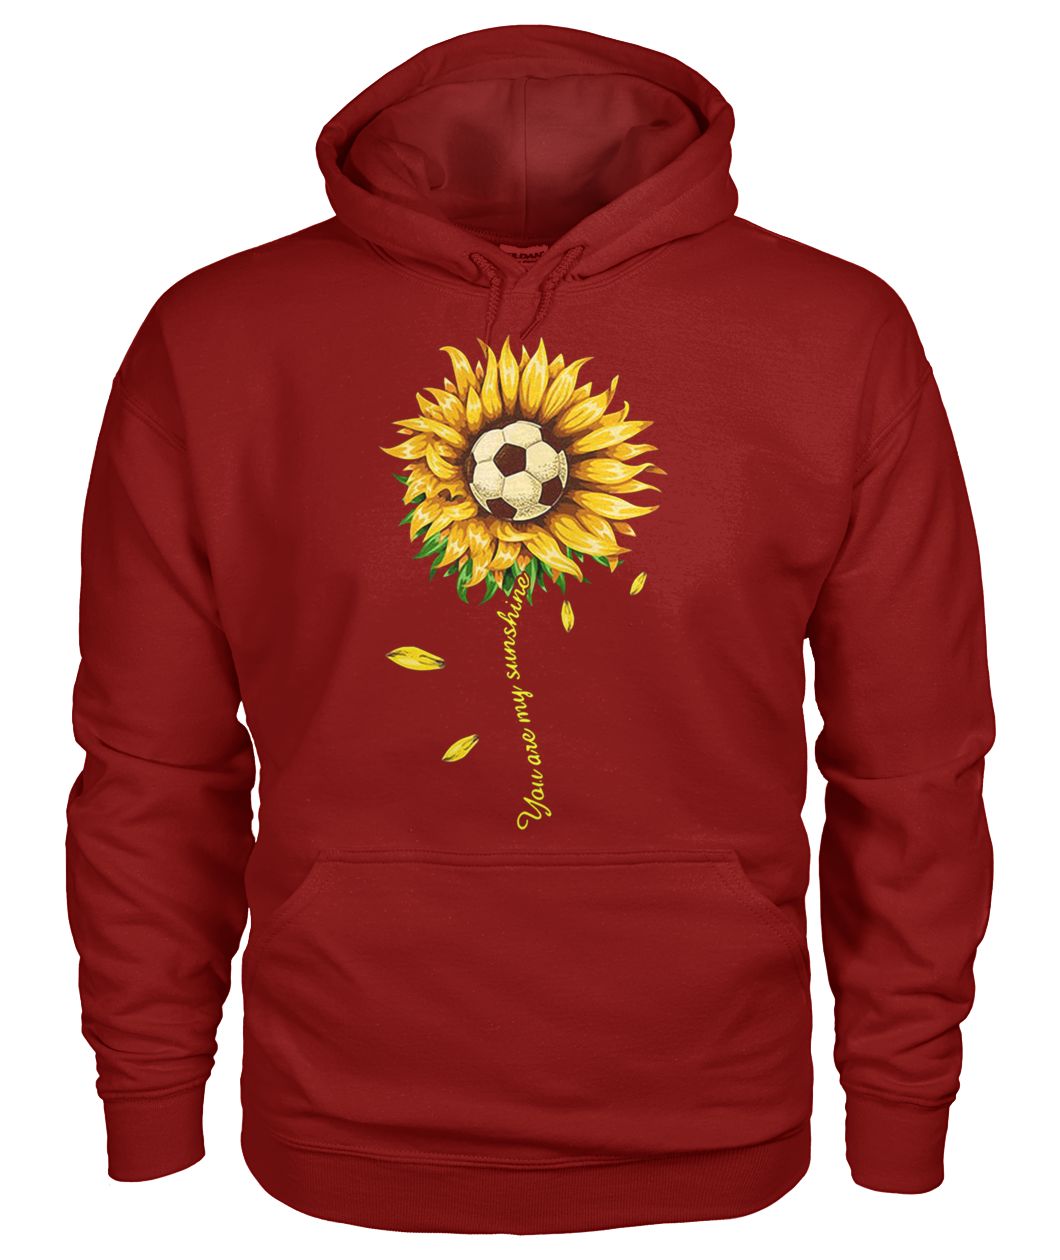 Soccer ball sunflower you are my sunshine gildan hoodie